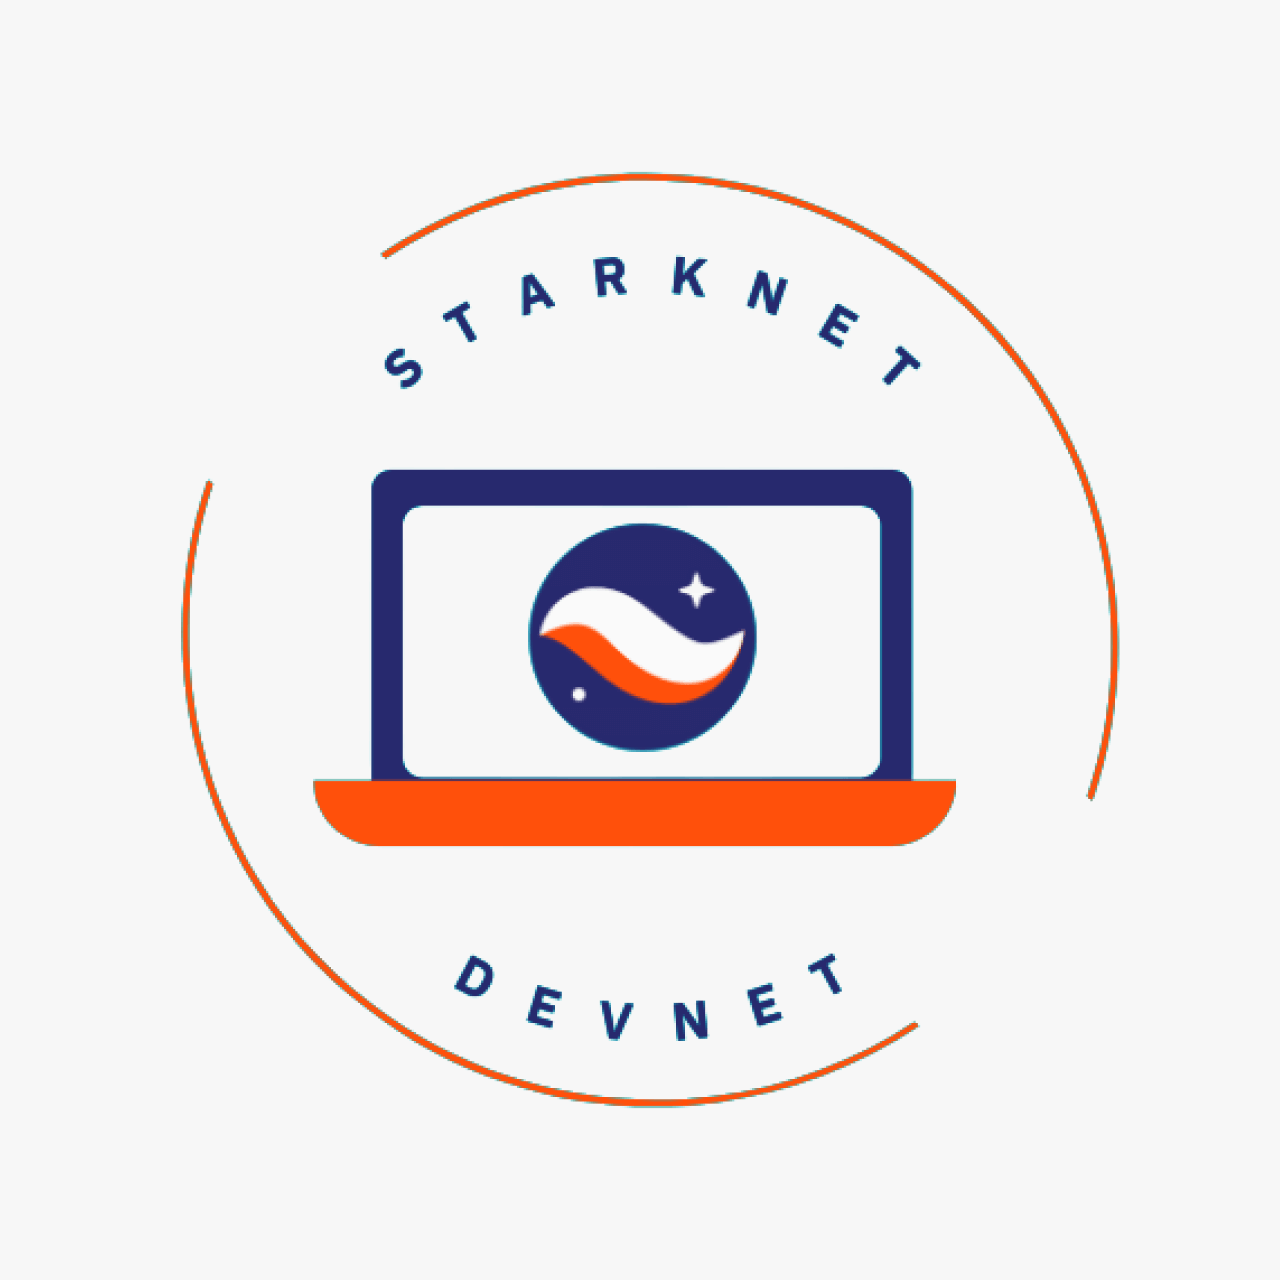 Starknet Devnet - logo